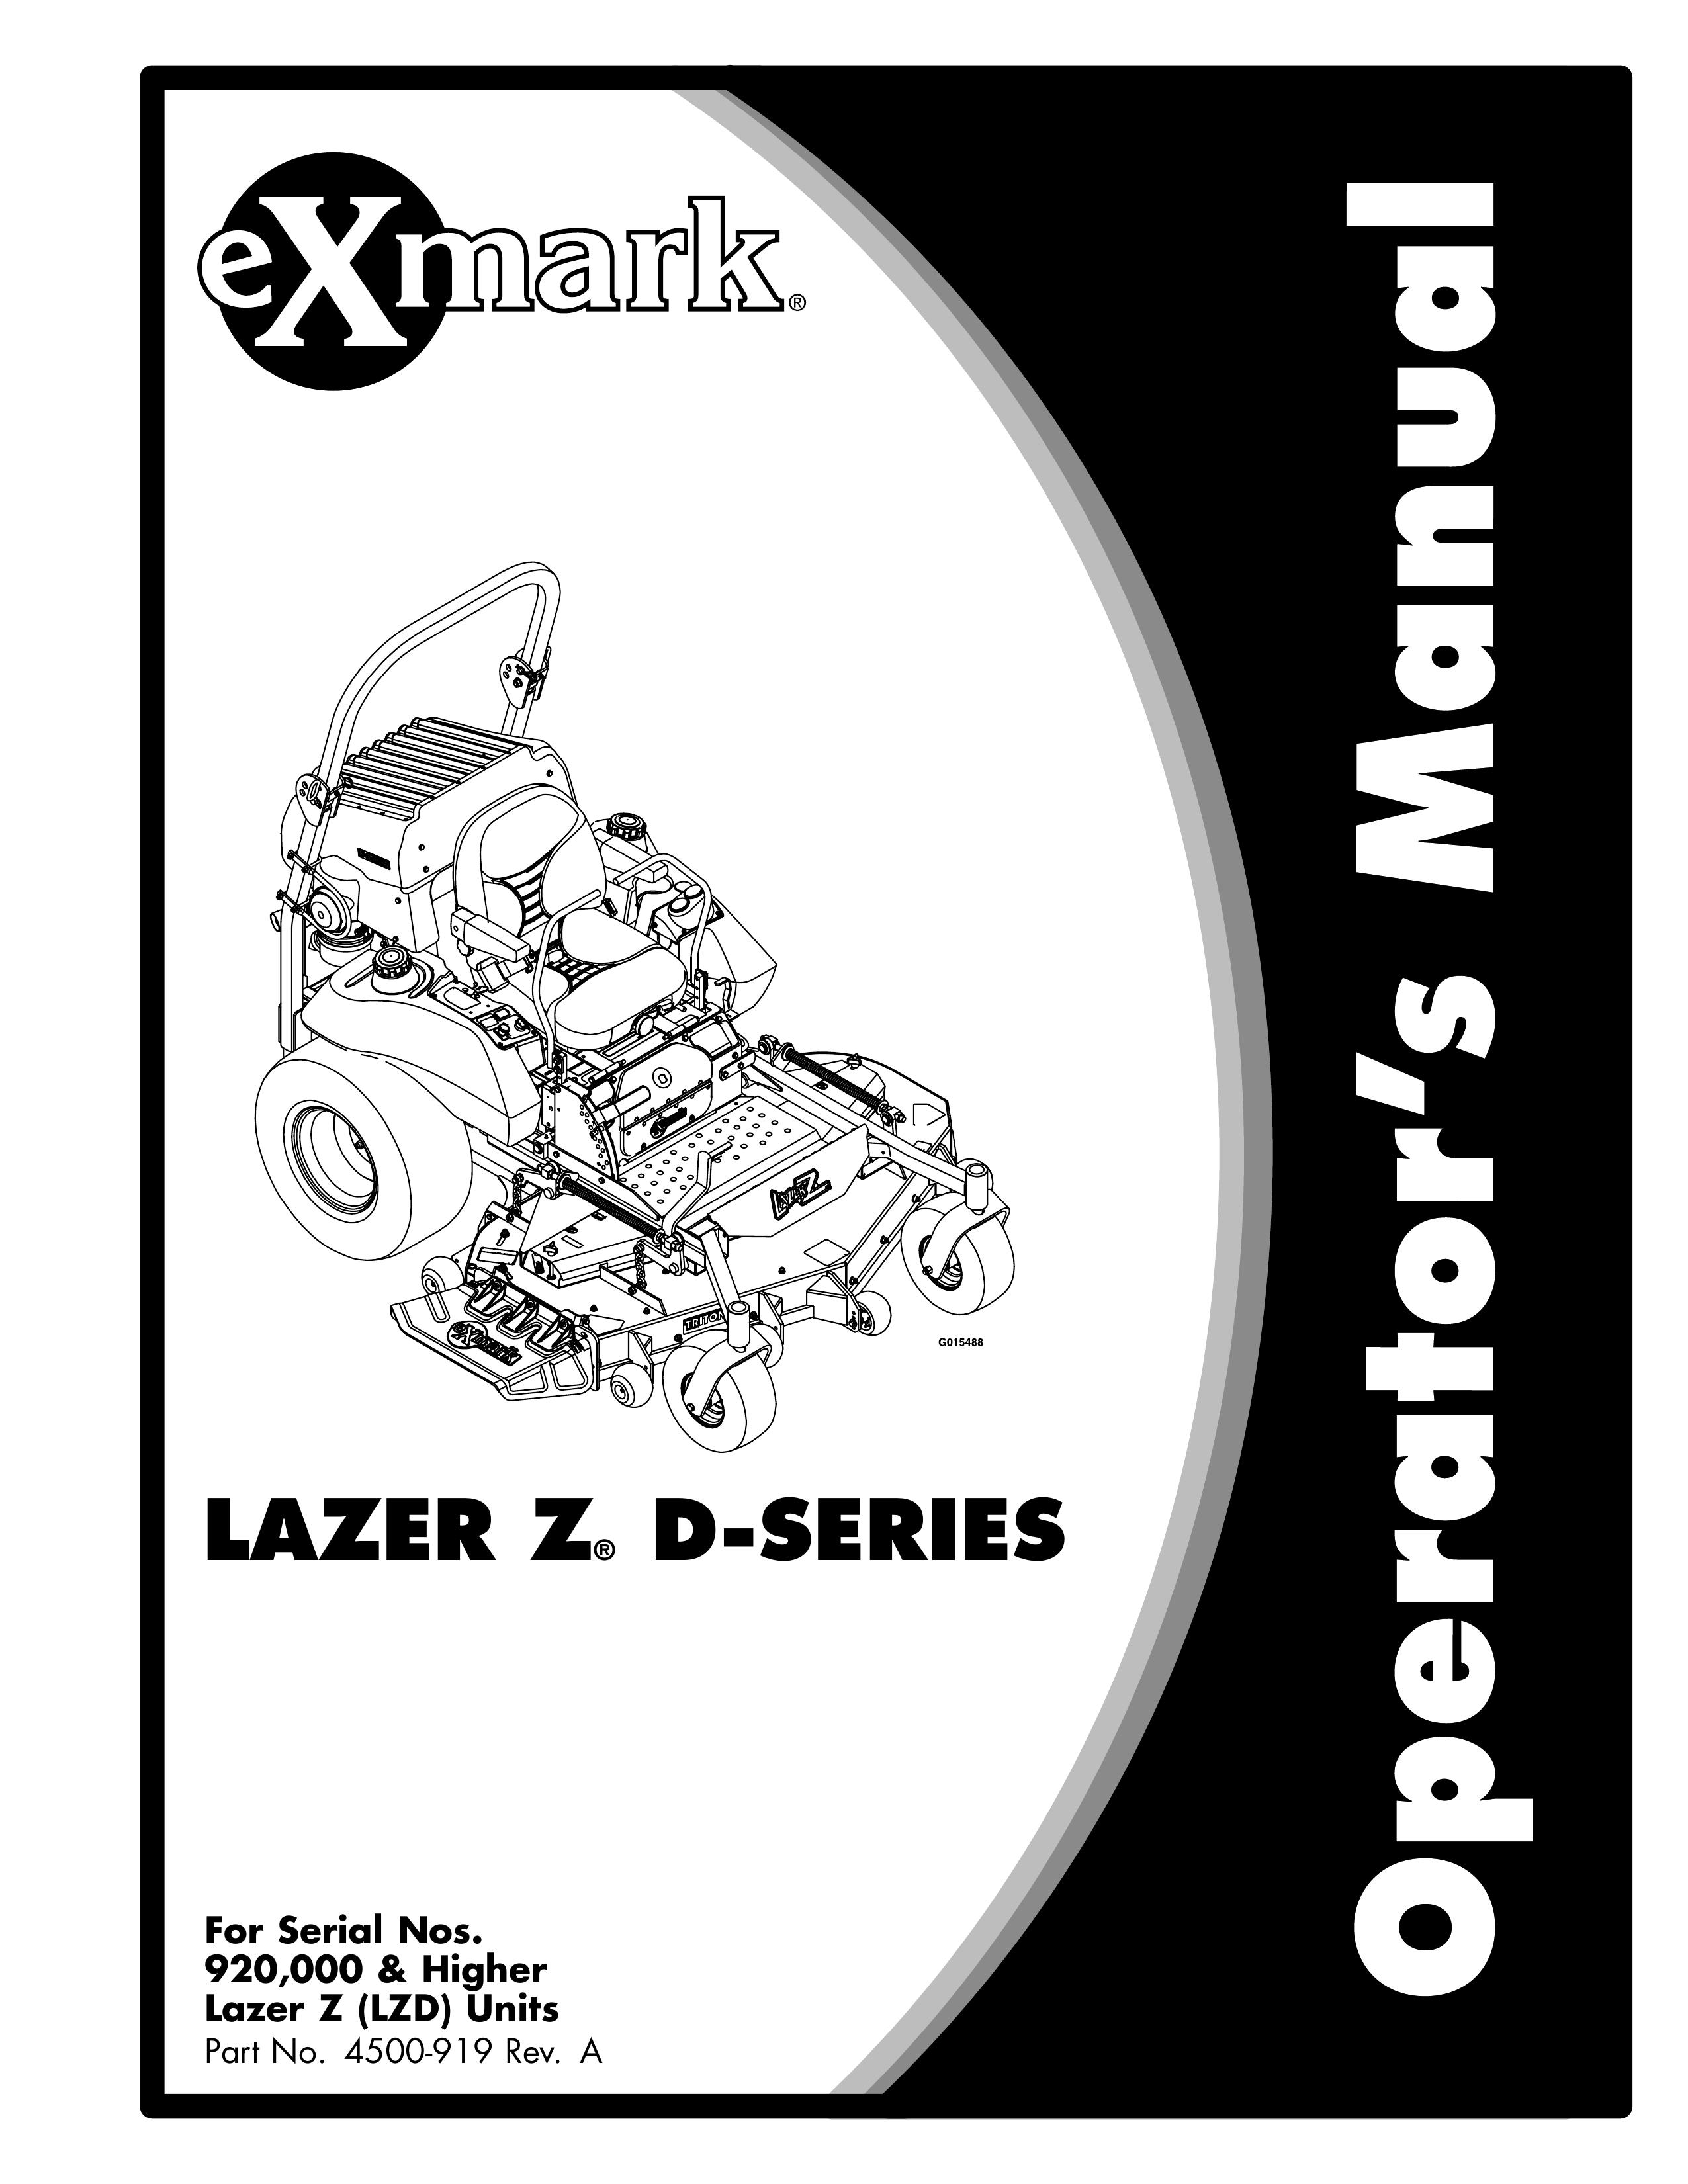 Exmark 000 & higher Lawn Mower User Manual